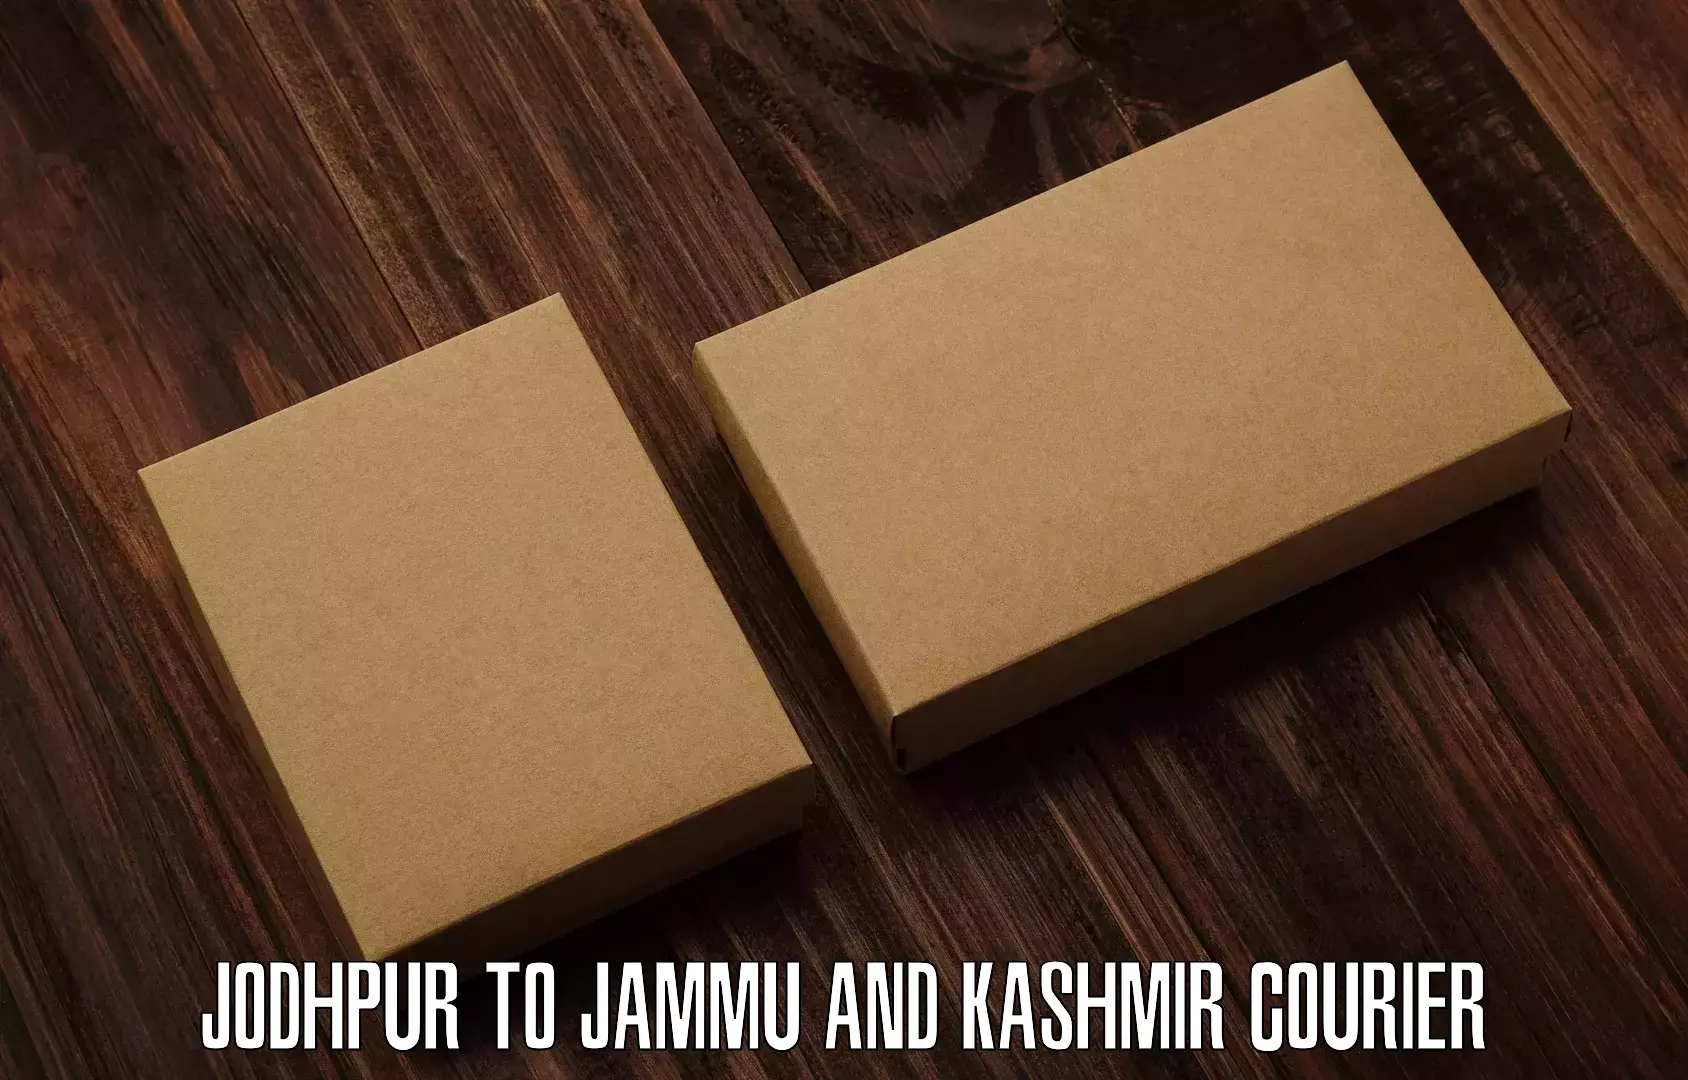 Individual parcel service Jodhpur to Udhampur